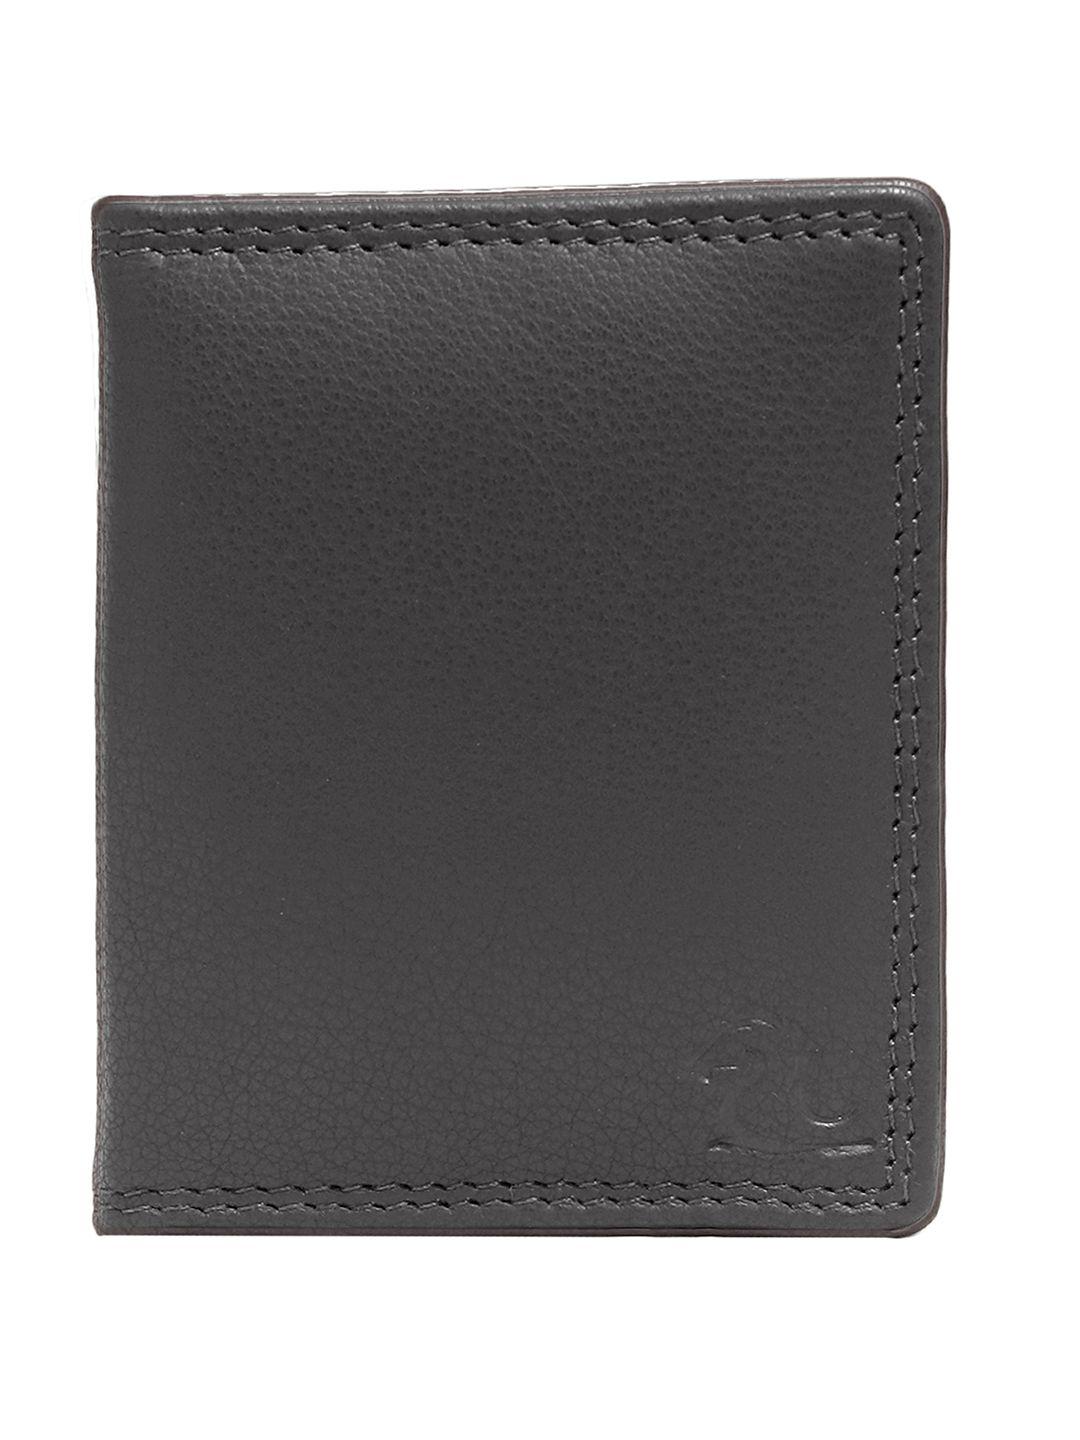 kara unisex coffee brown solid leather card holder